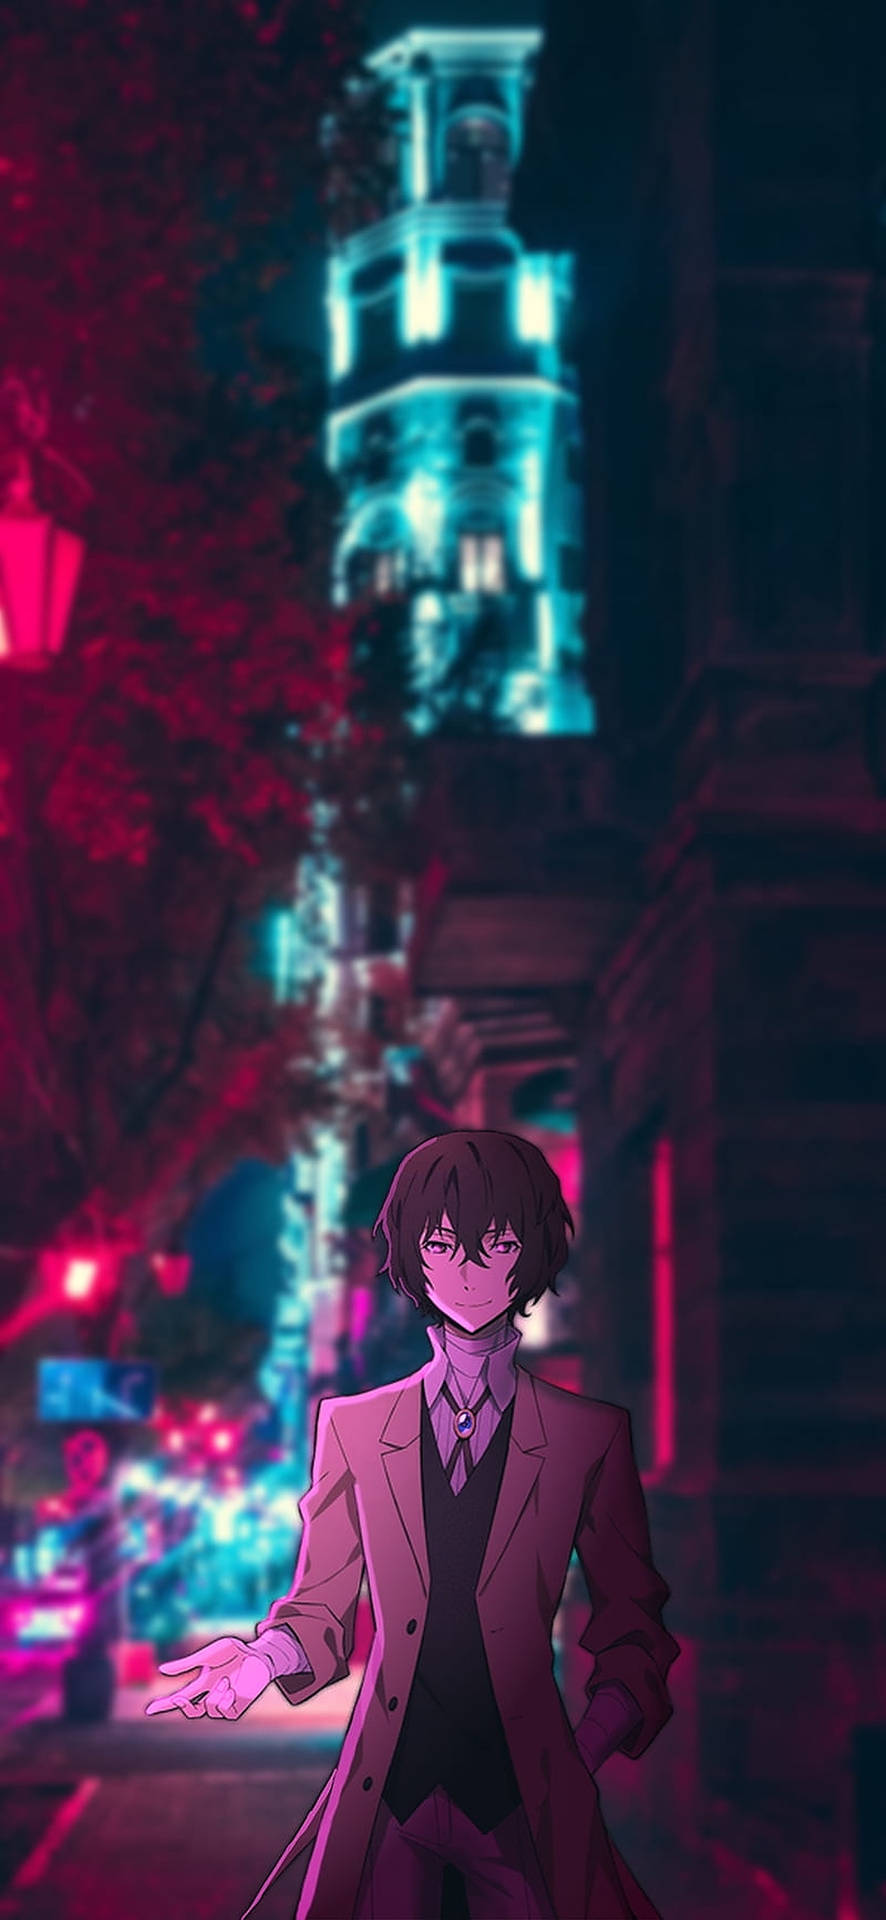 Dazai Osamu in Front of a Luminous Tower Wallpaper